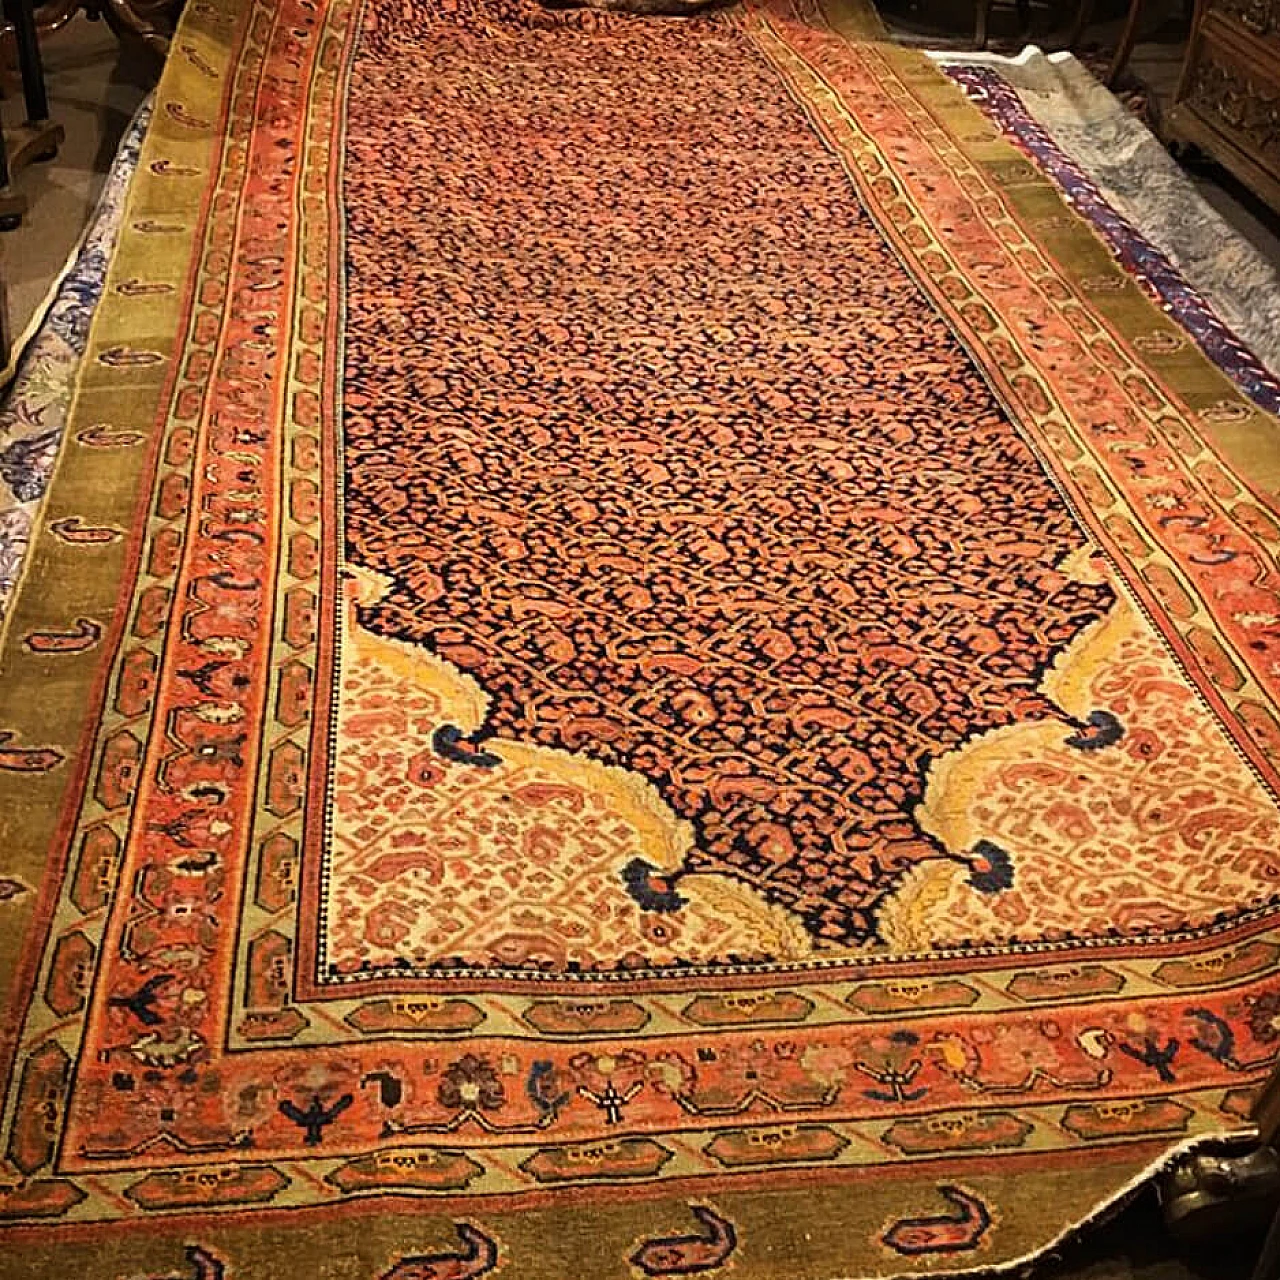 Grande tappeto orientale, '800 1